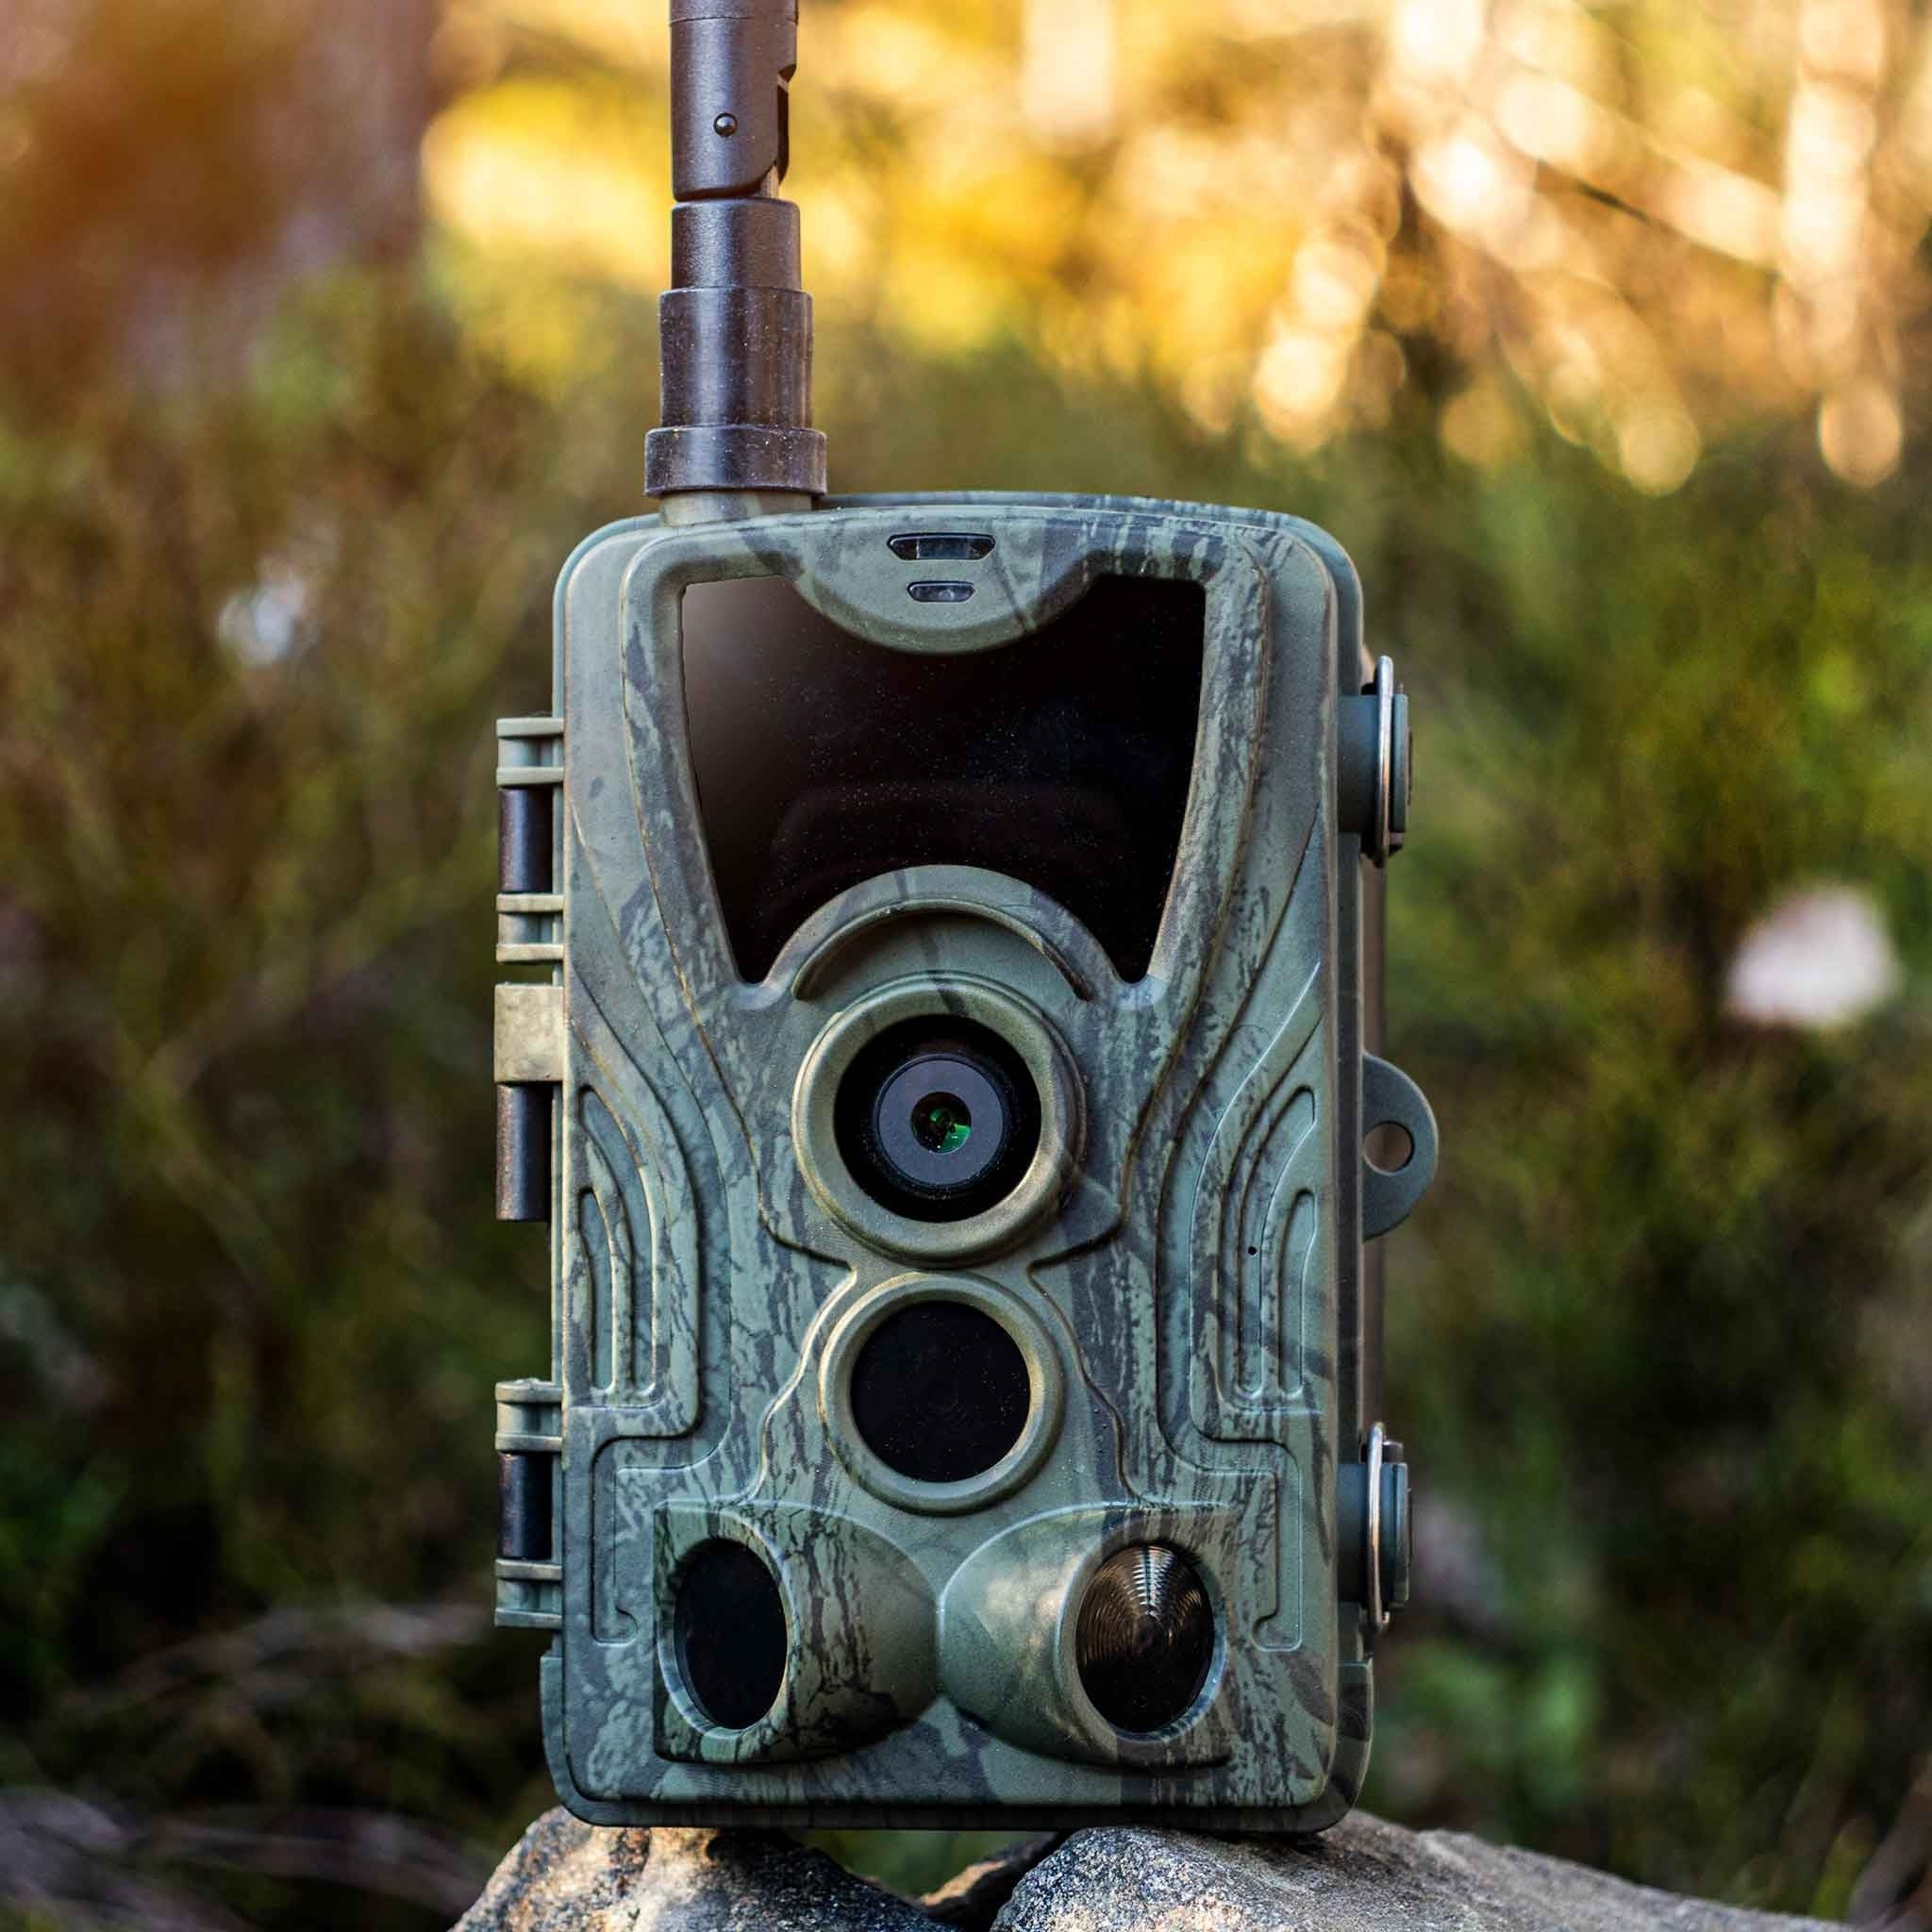 Caméra de chasse GSM 4G